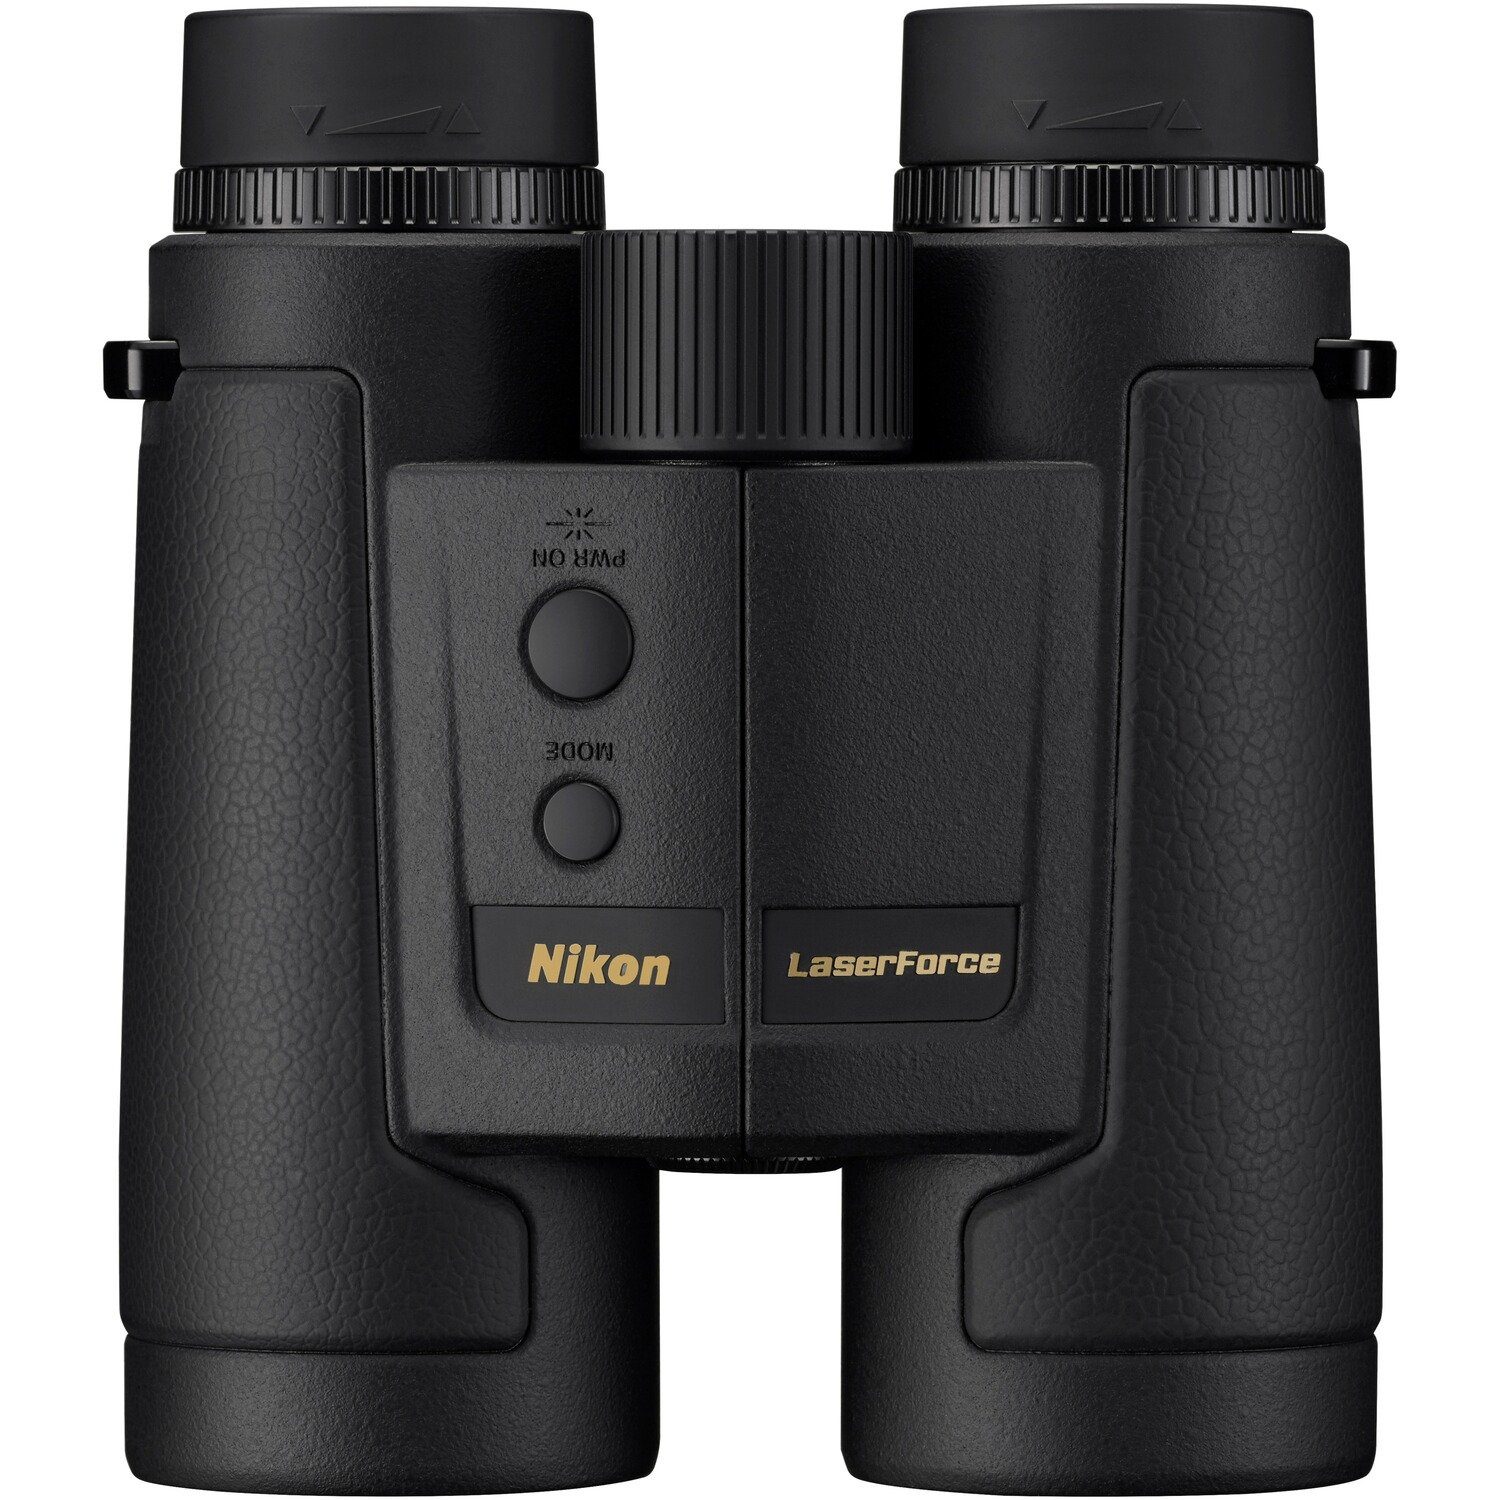 Fernglas Nikon mit 10x42 Fernglas Entfernungsmesser Laserforce